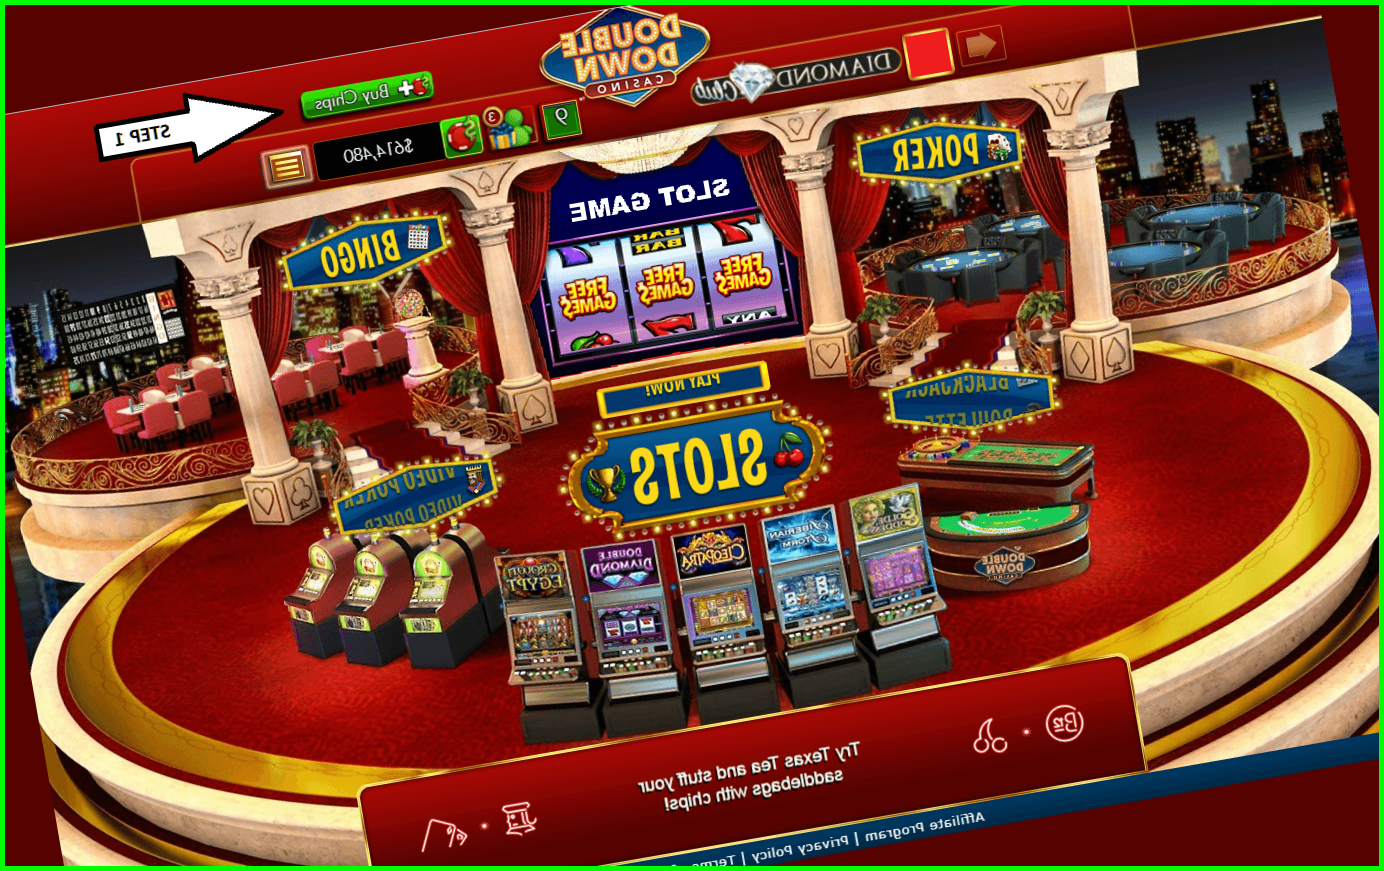 Doubledown casino discount promo codes